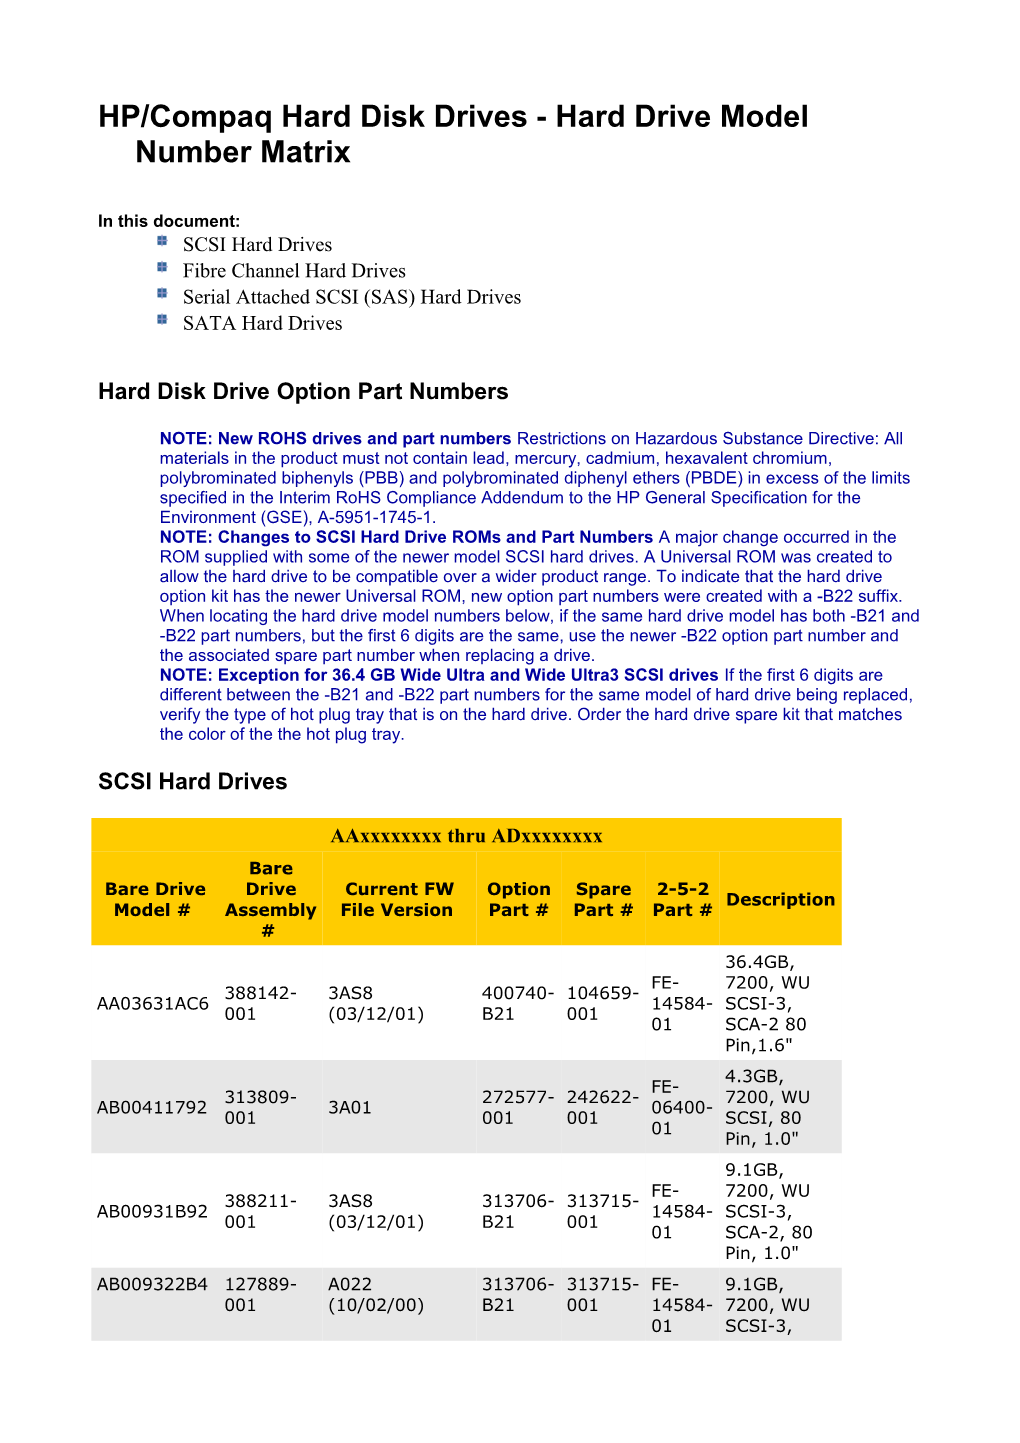 HP/Compaq Hard Disk Drives - Hard Drive Model Number Matrix